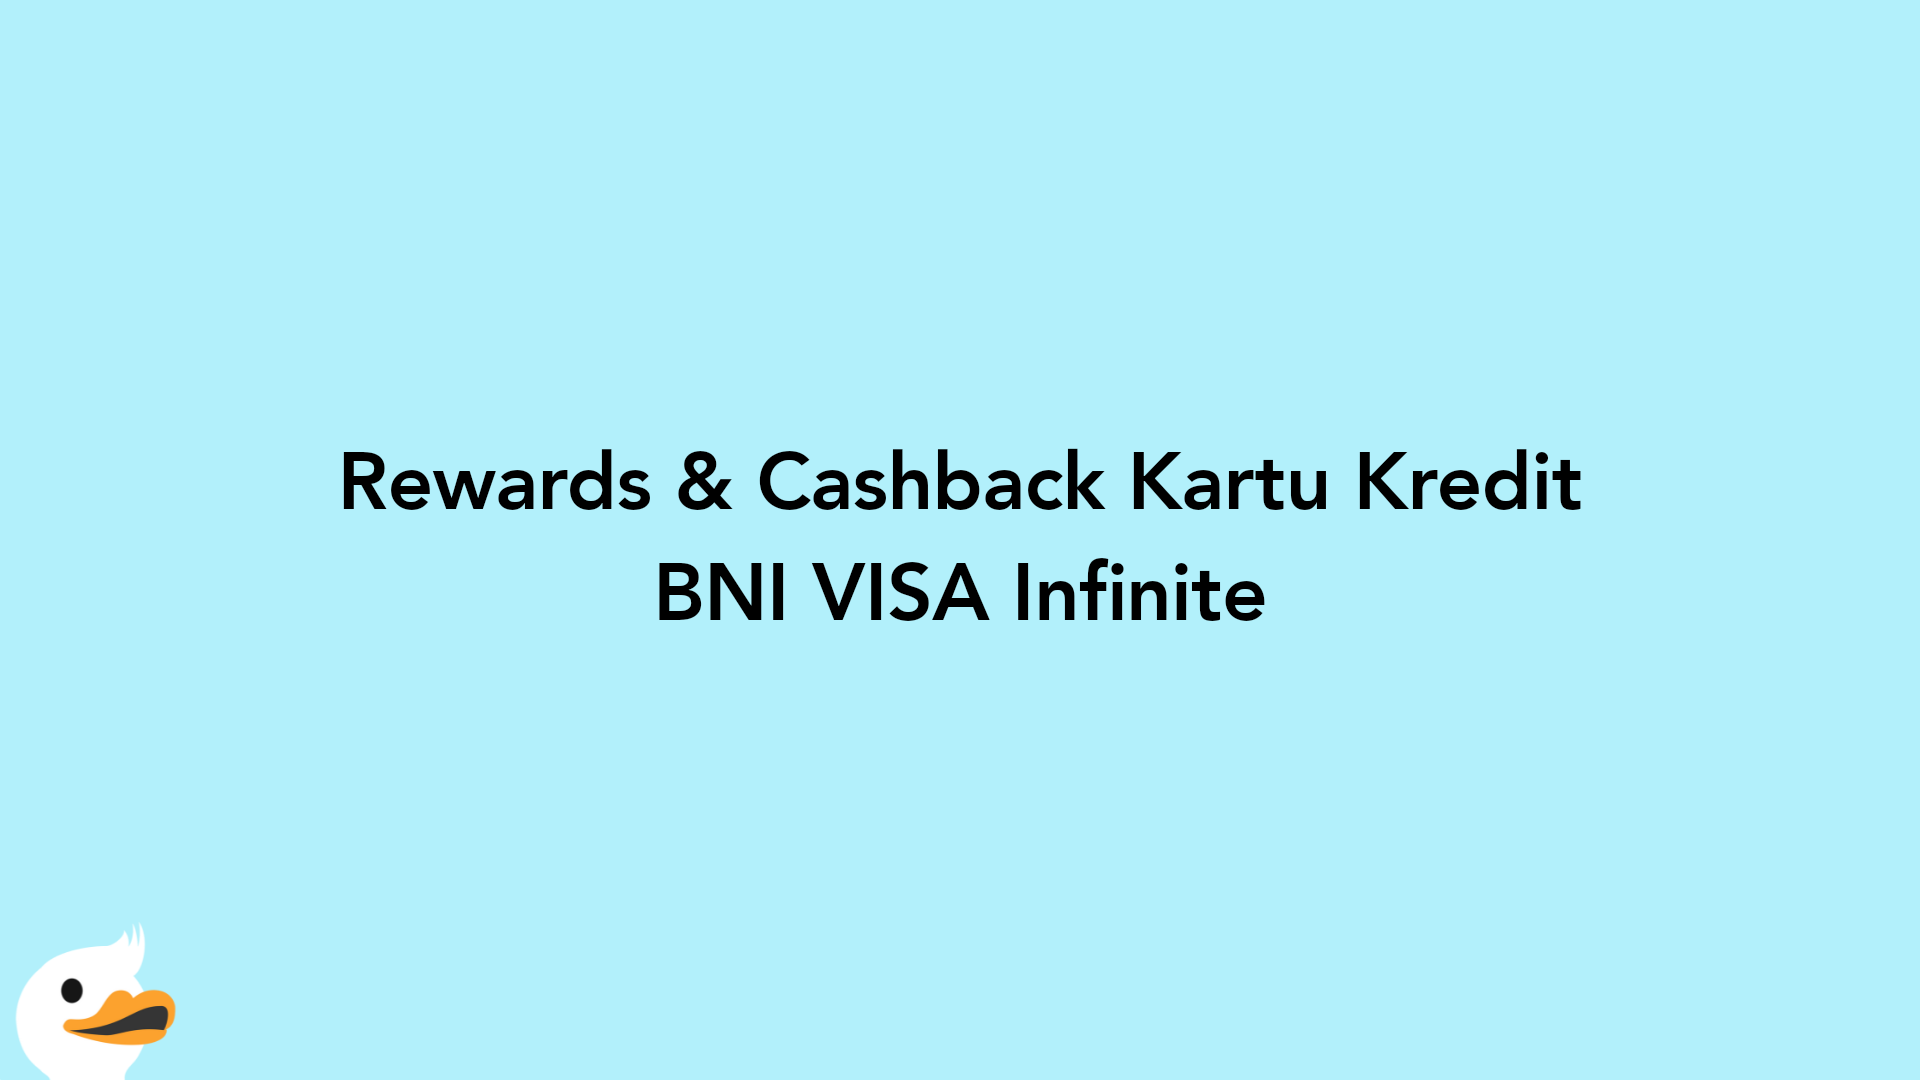 Rewards & Cashback Kartu Kredit BNI VISA Infinite